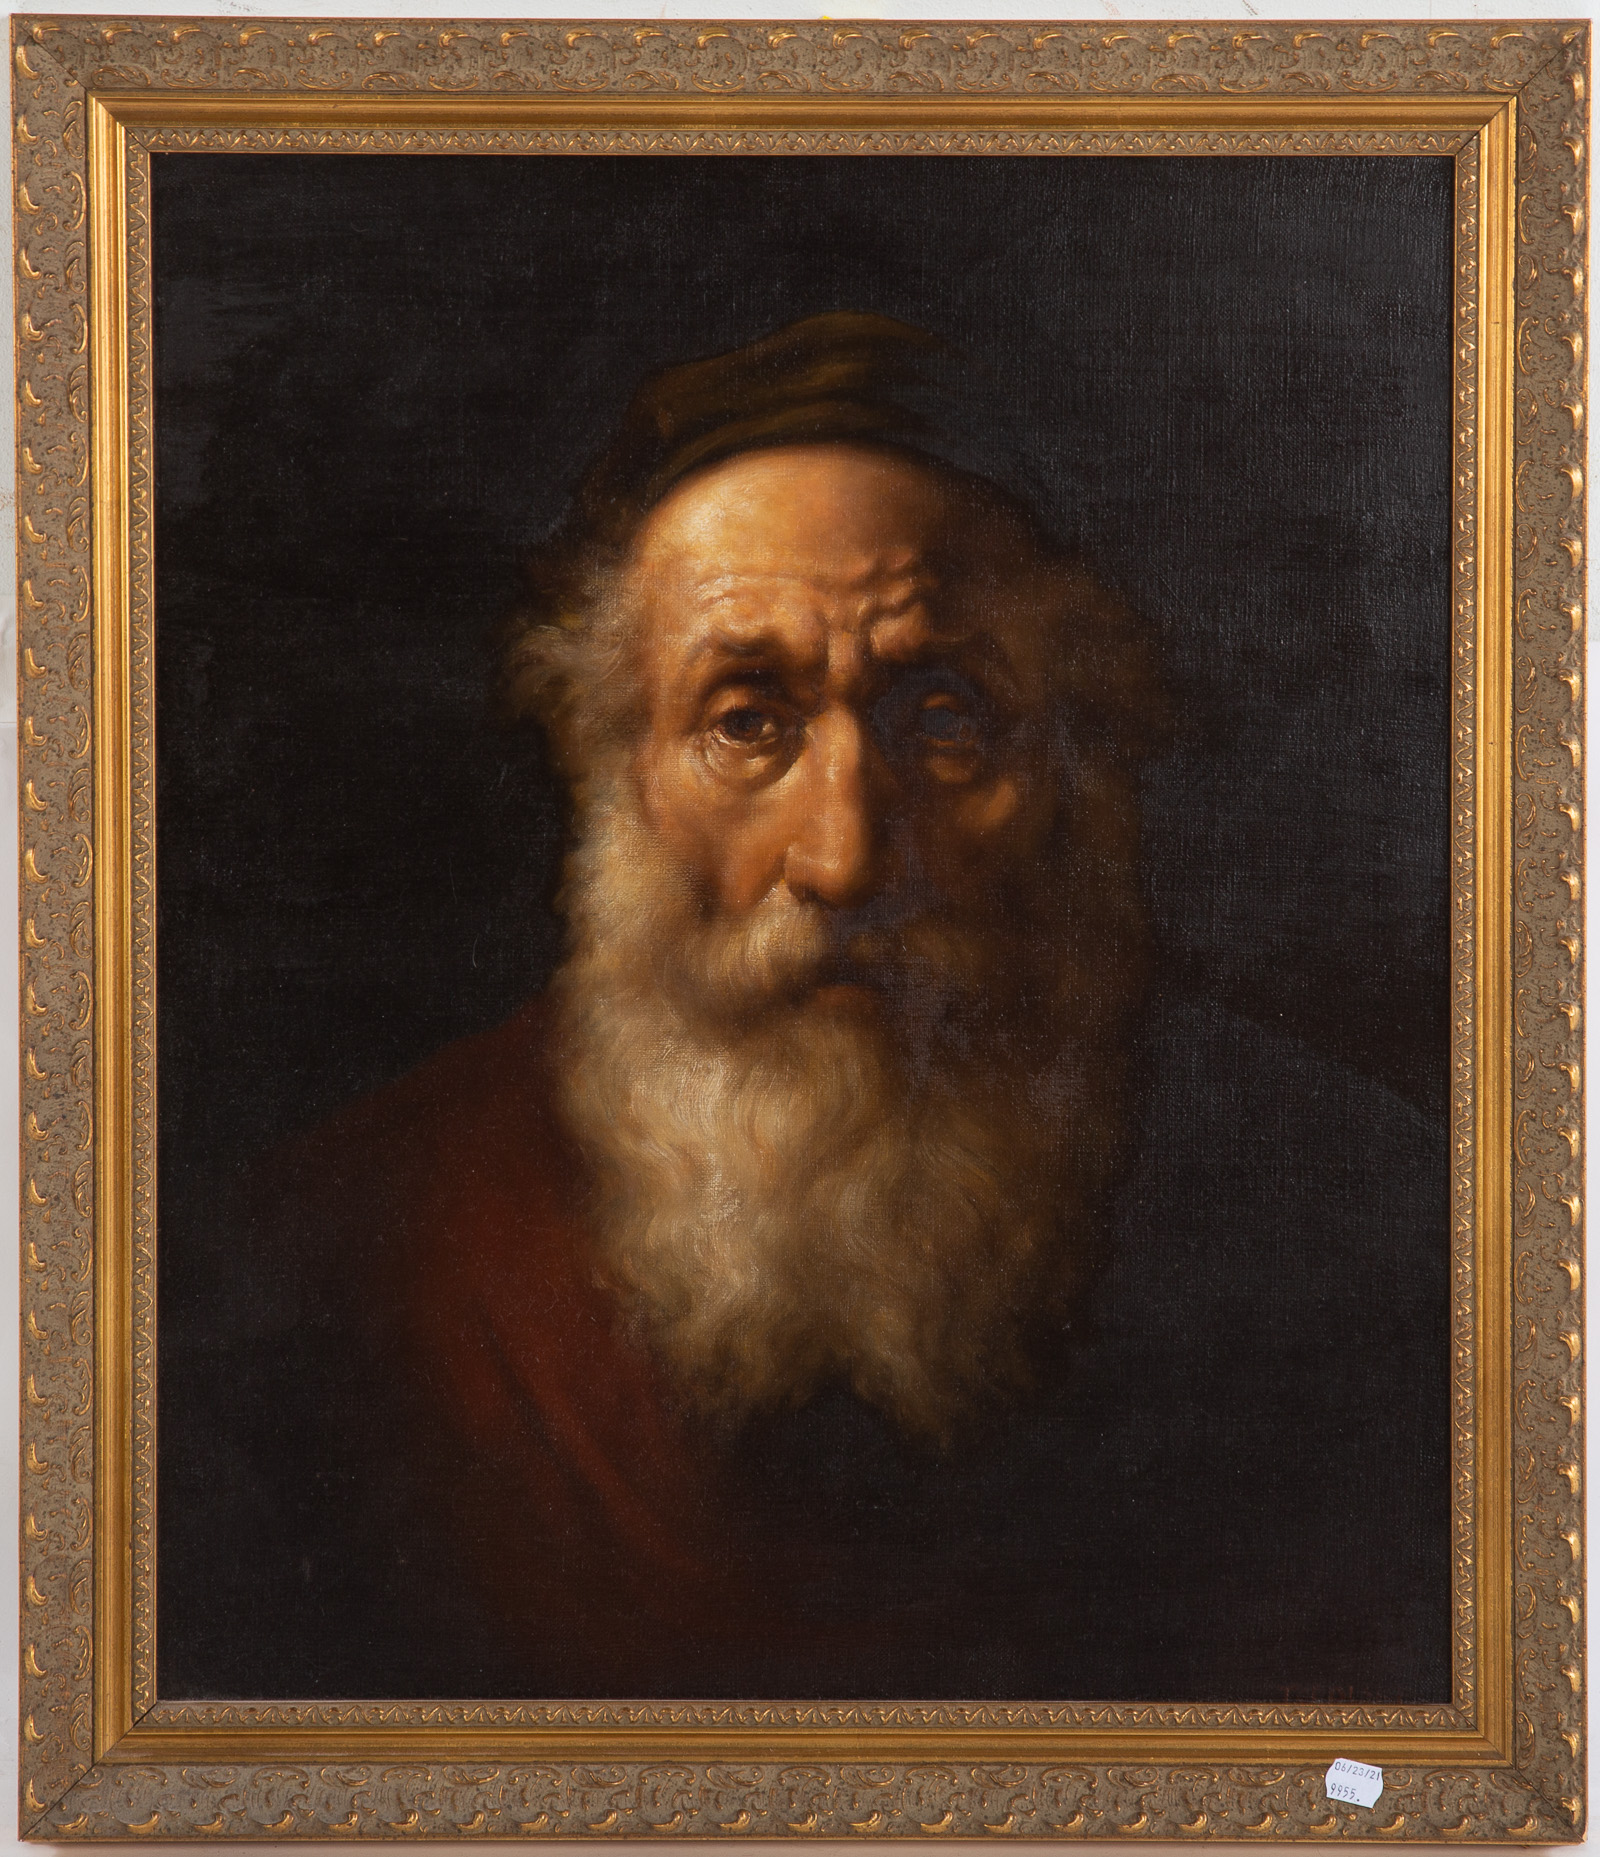 TOLOSKI. PORTRAIT OF AN ELDERLY JEWISH